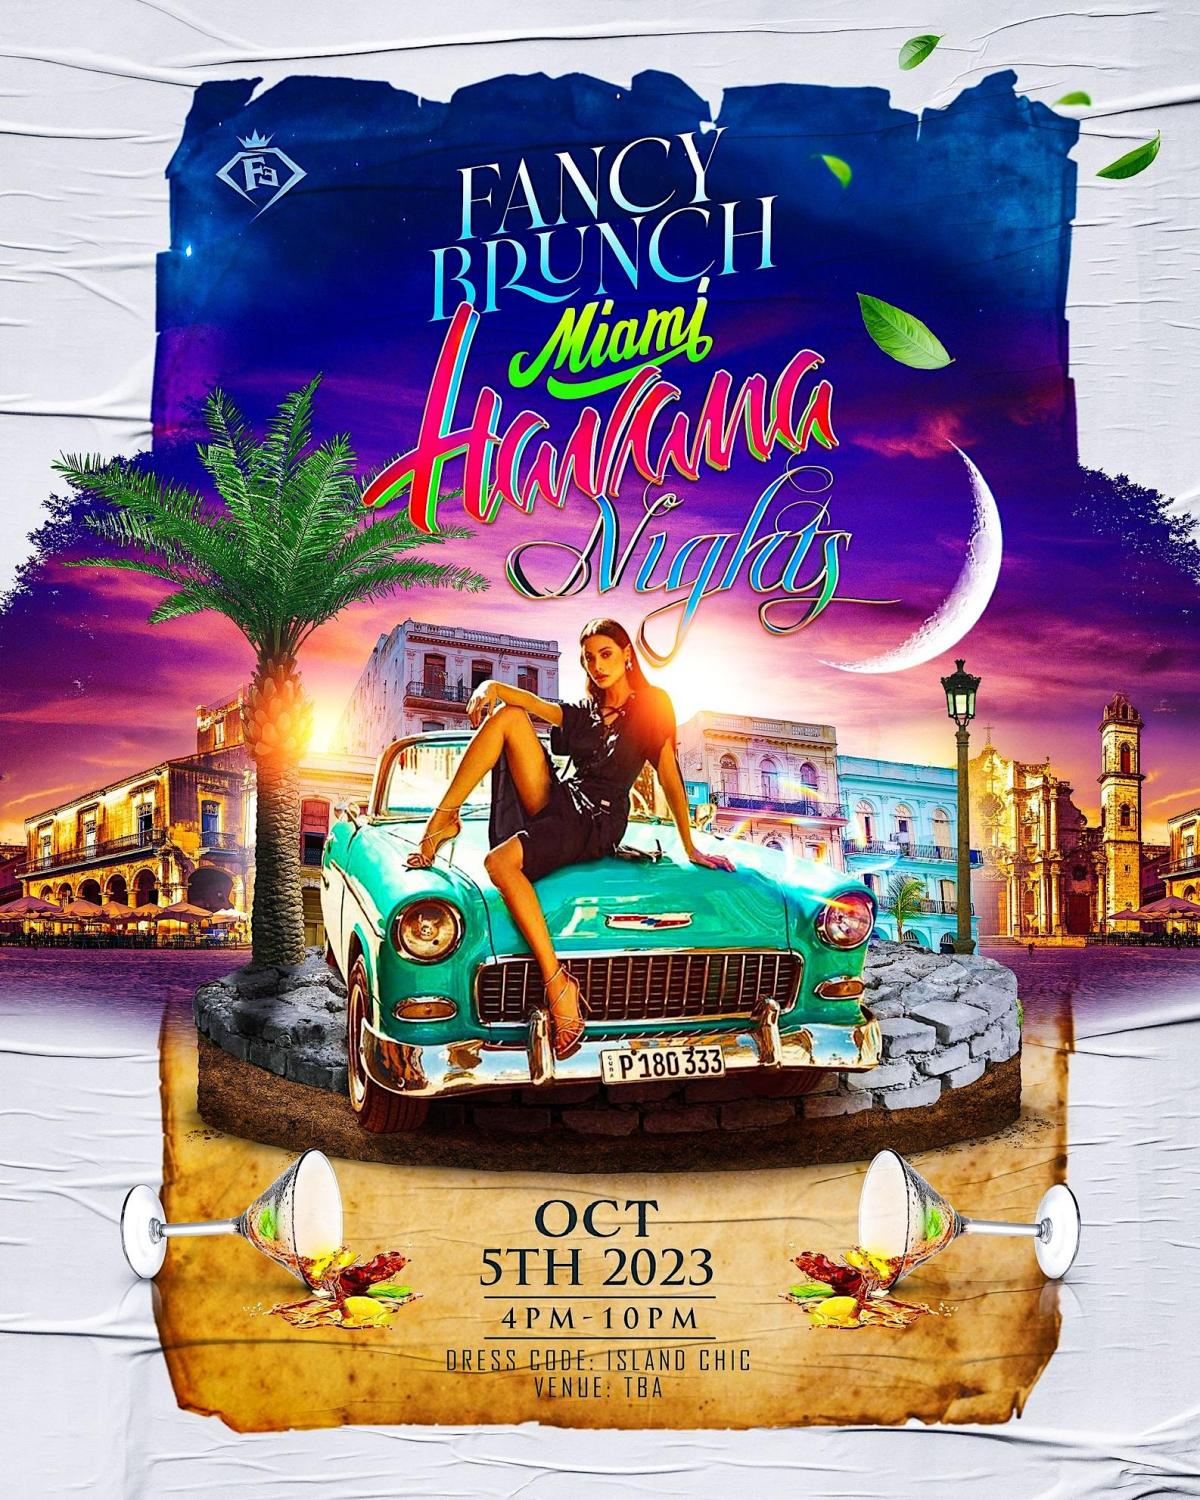 Fancy Brunch Miami: Havana Nights flyer or graphic.